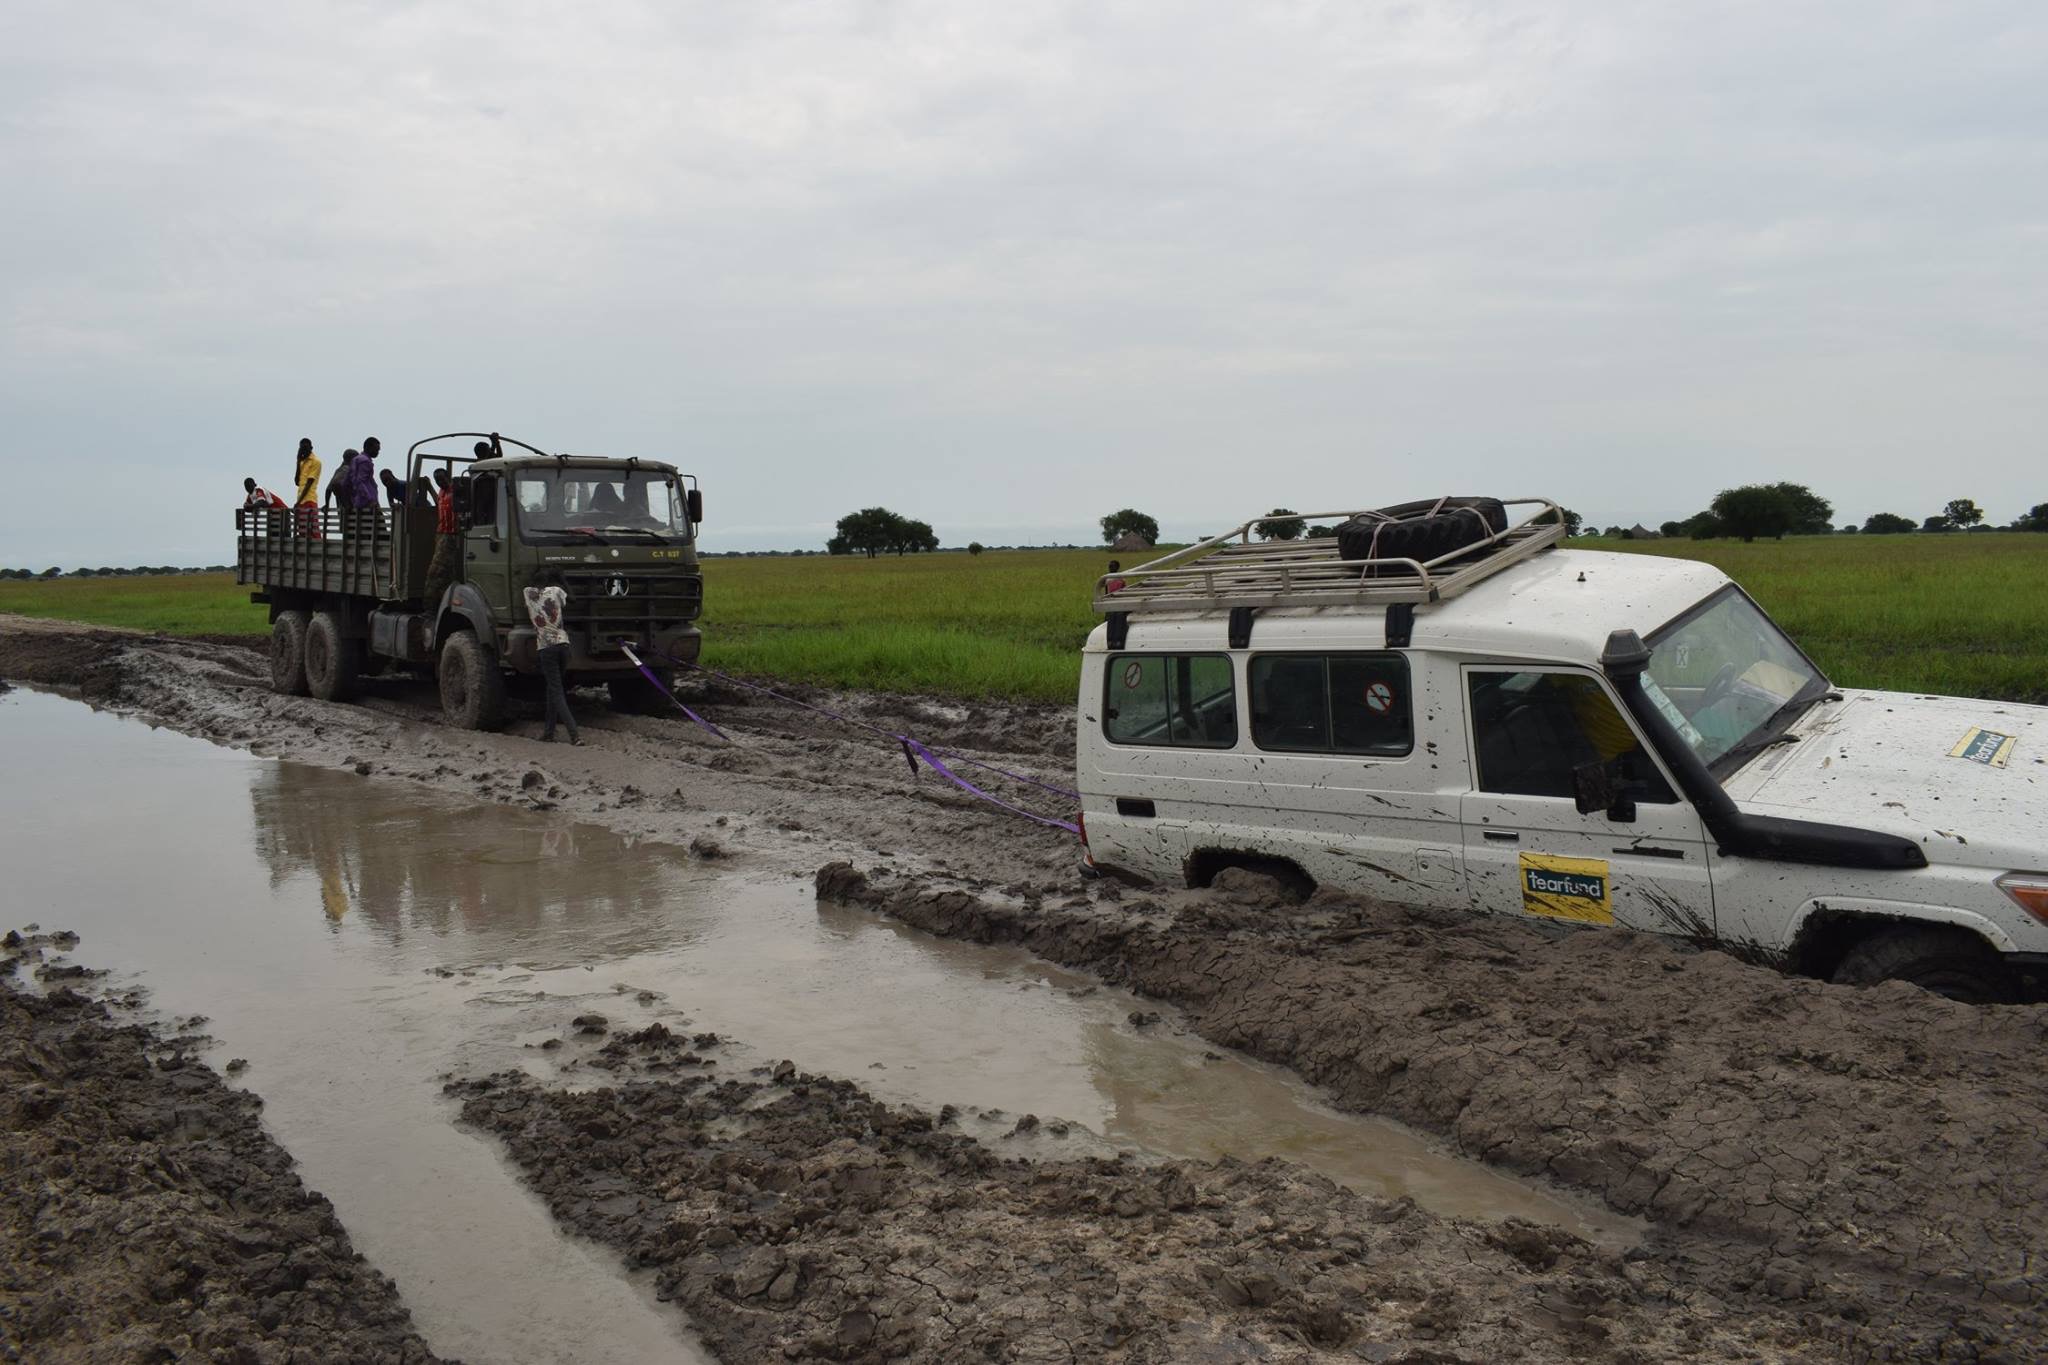 Pibor under precarious situation as muddy roads cut off supplies